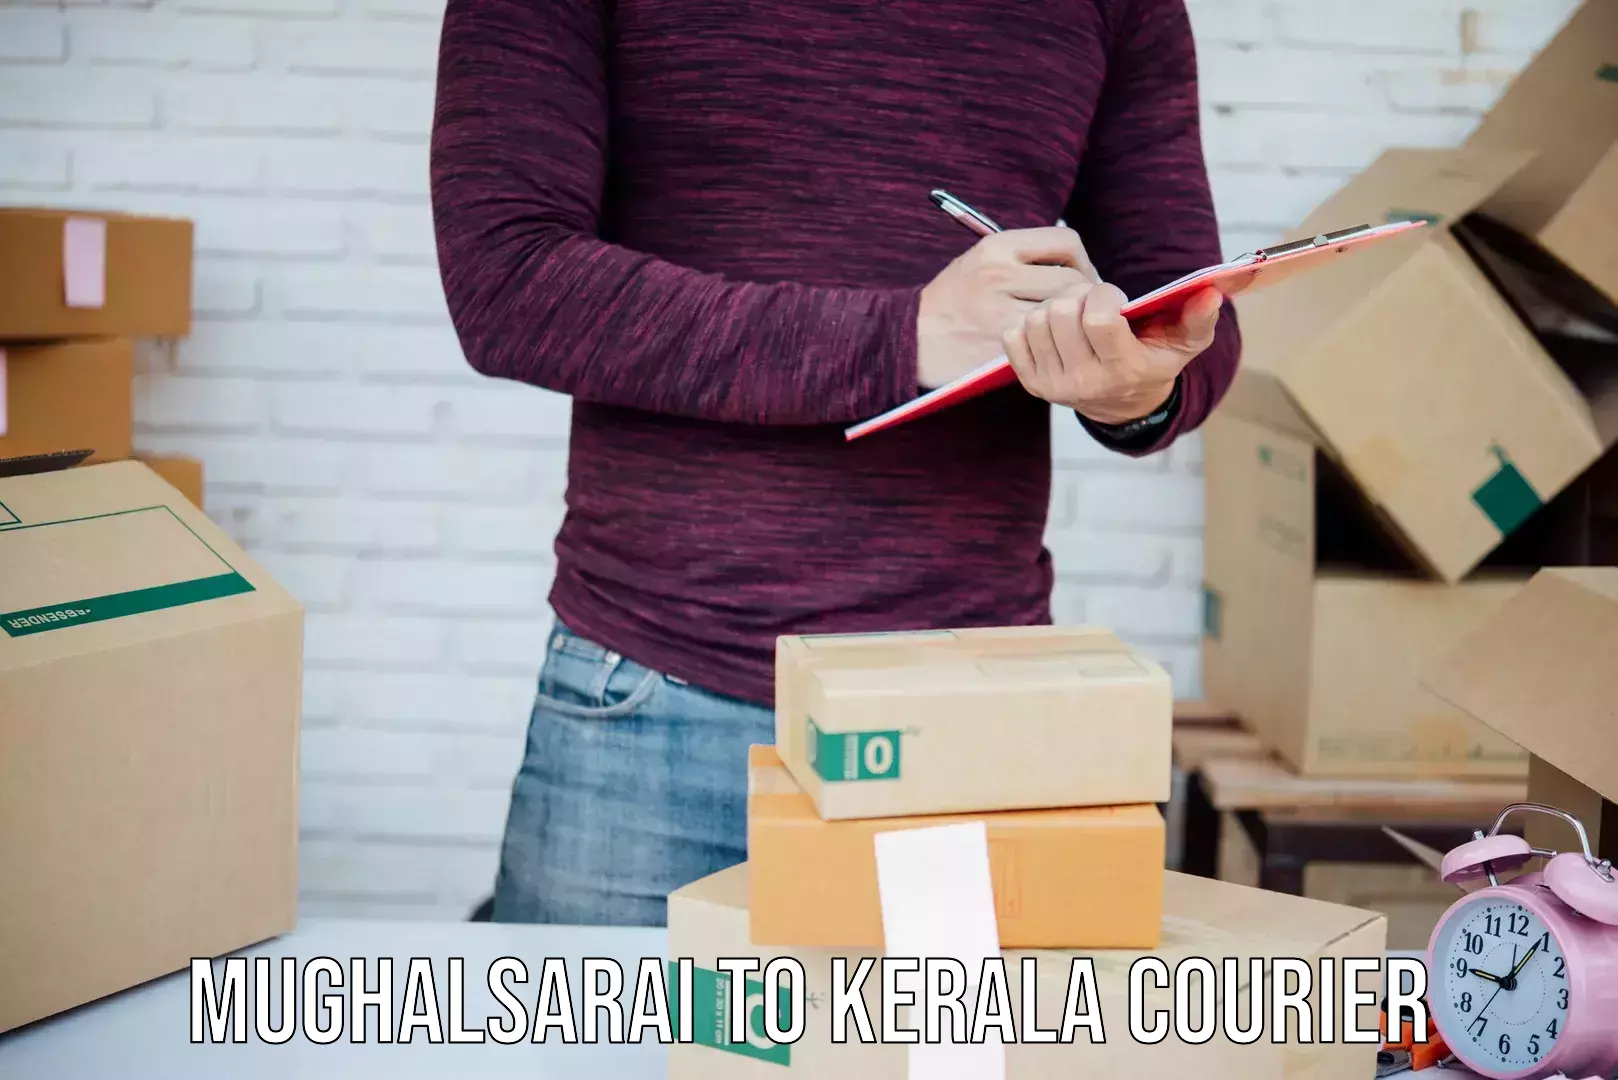 Multi-service courier options Mughalsarai to Parappa